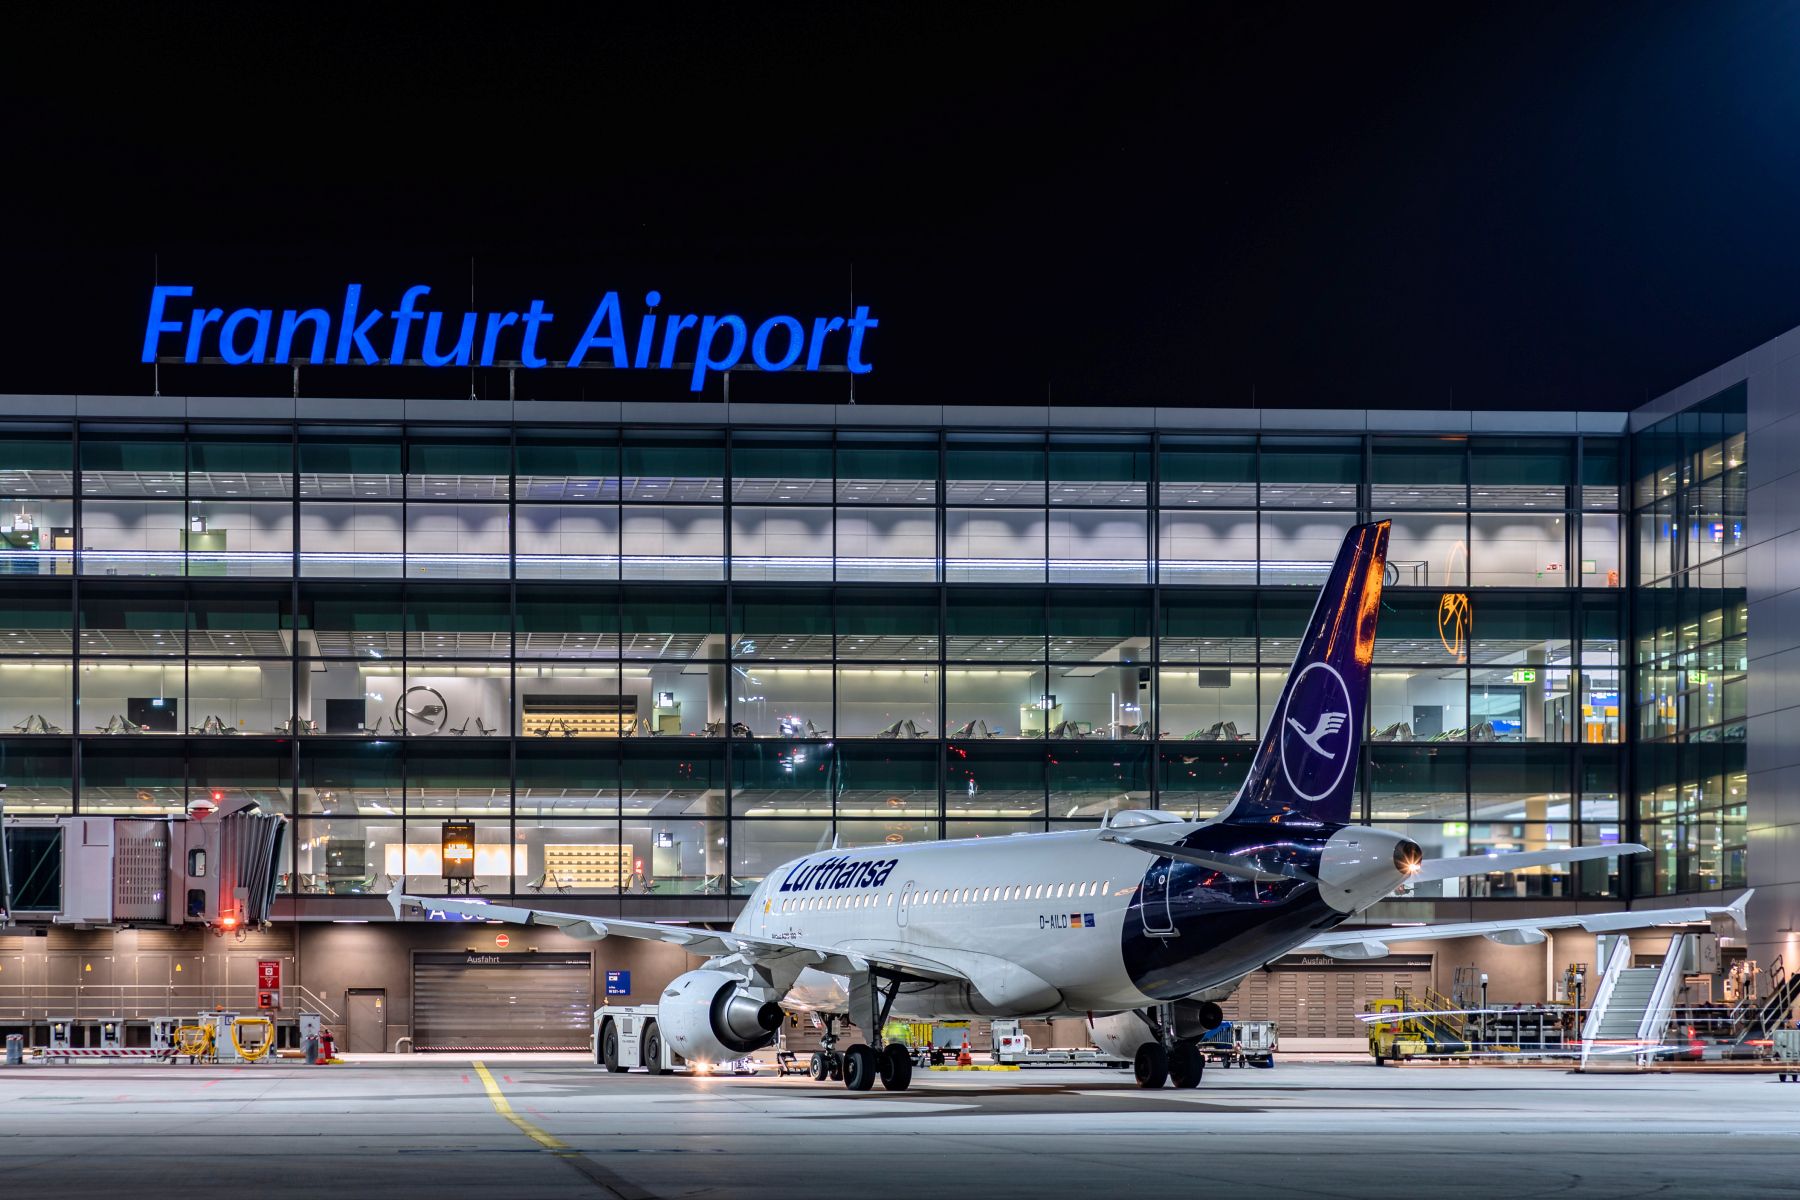 A Lufthansa plane at Frankfurt Airport (FRA) at night